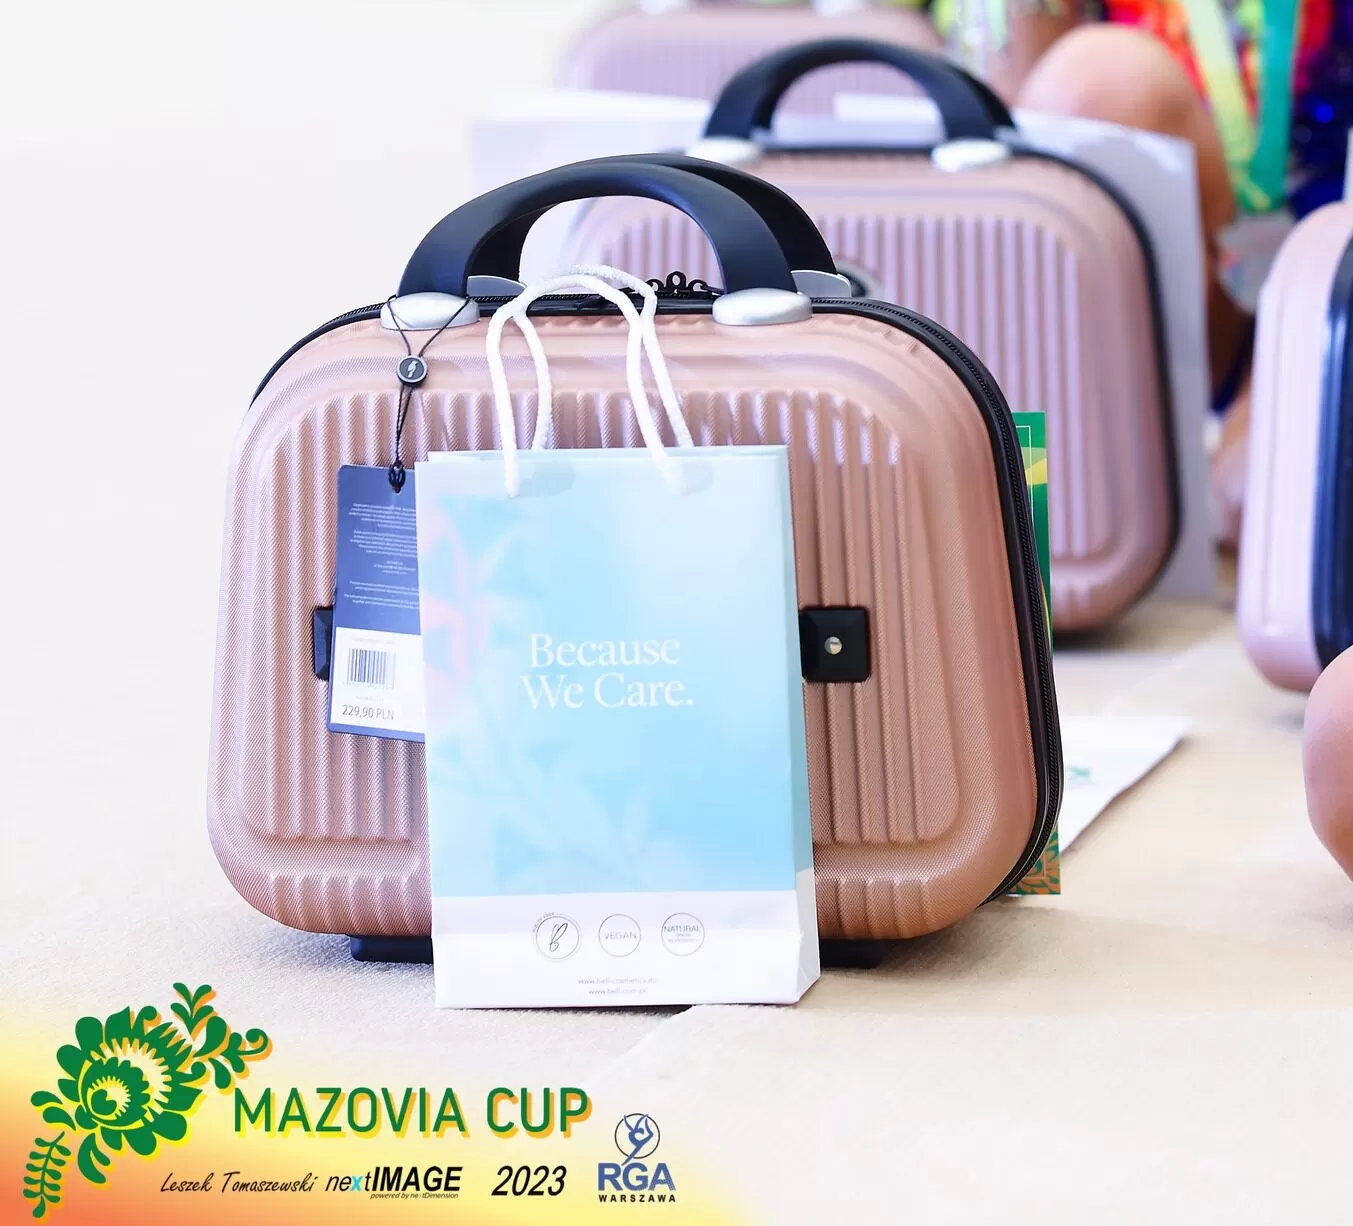 Mazovia Cup